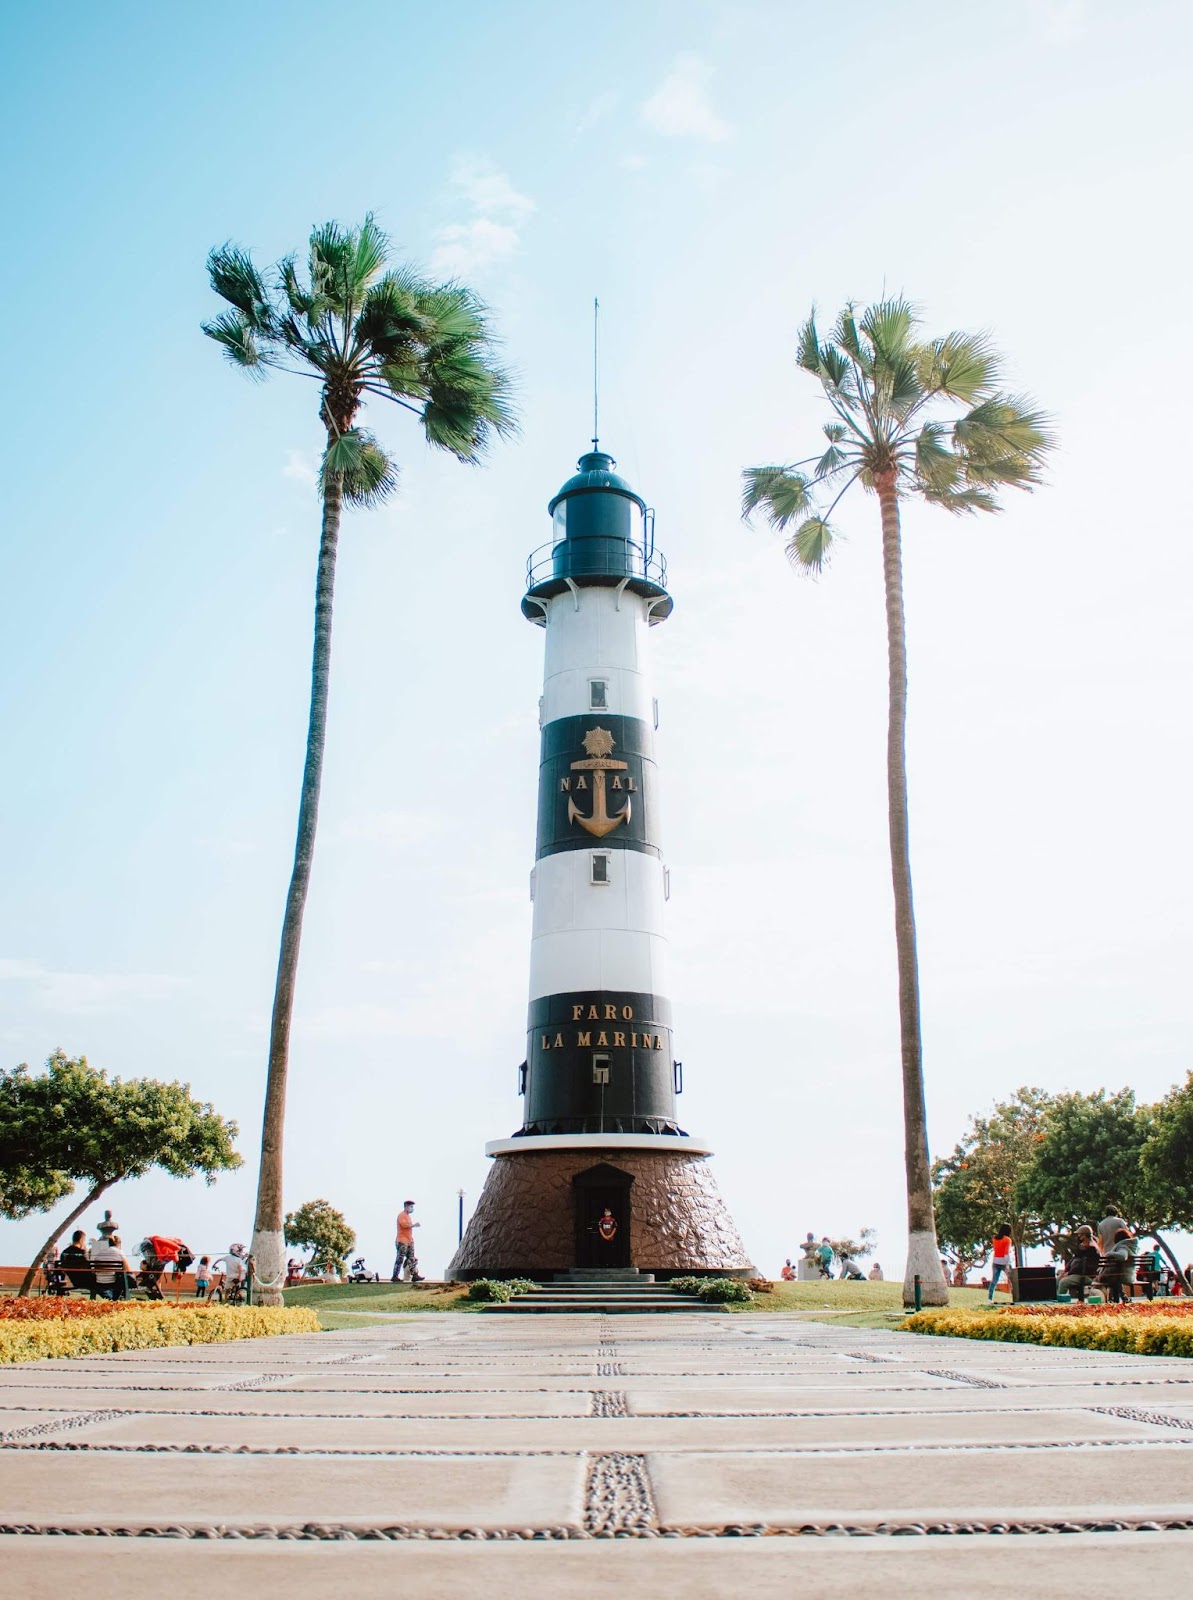 Faro La Marina, La Marina Lighthouse, active lighthouse facing Pacific Ocean